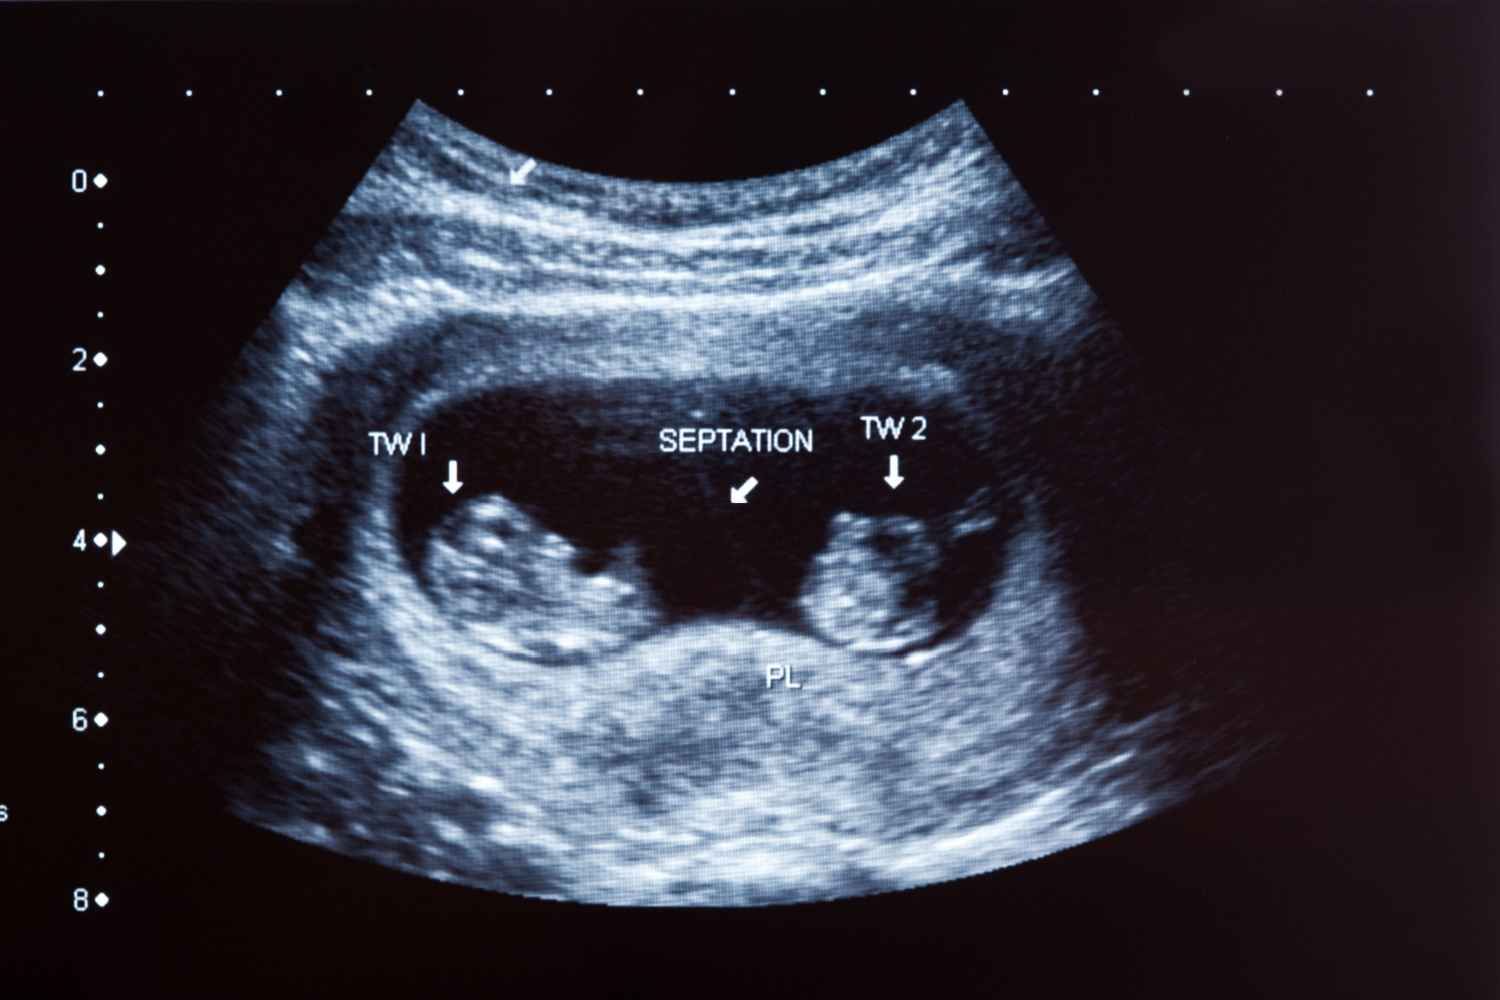 ultrasound revealing a twin pregnancy